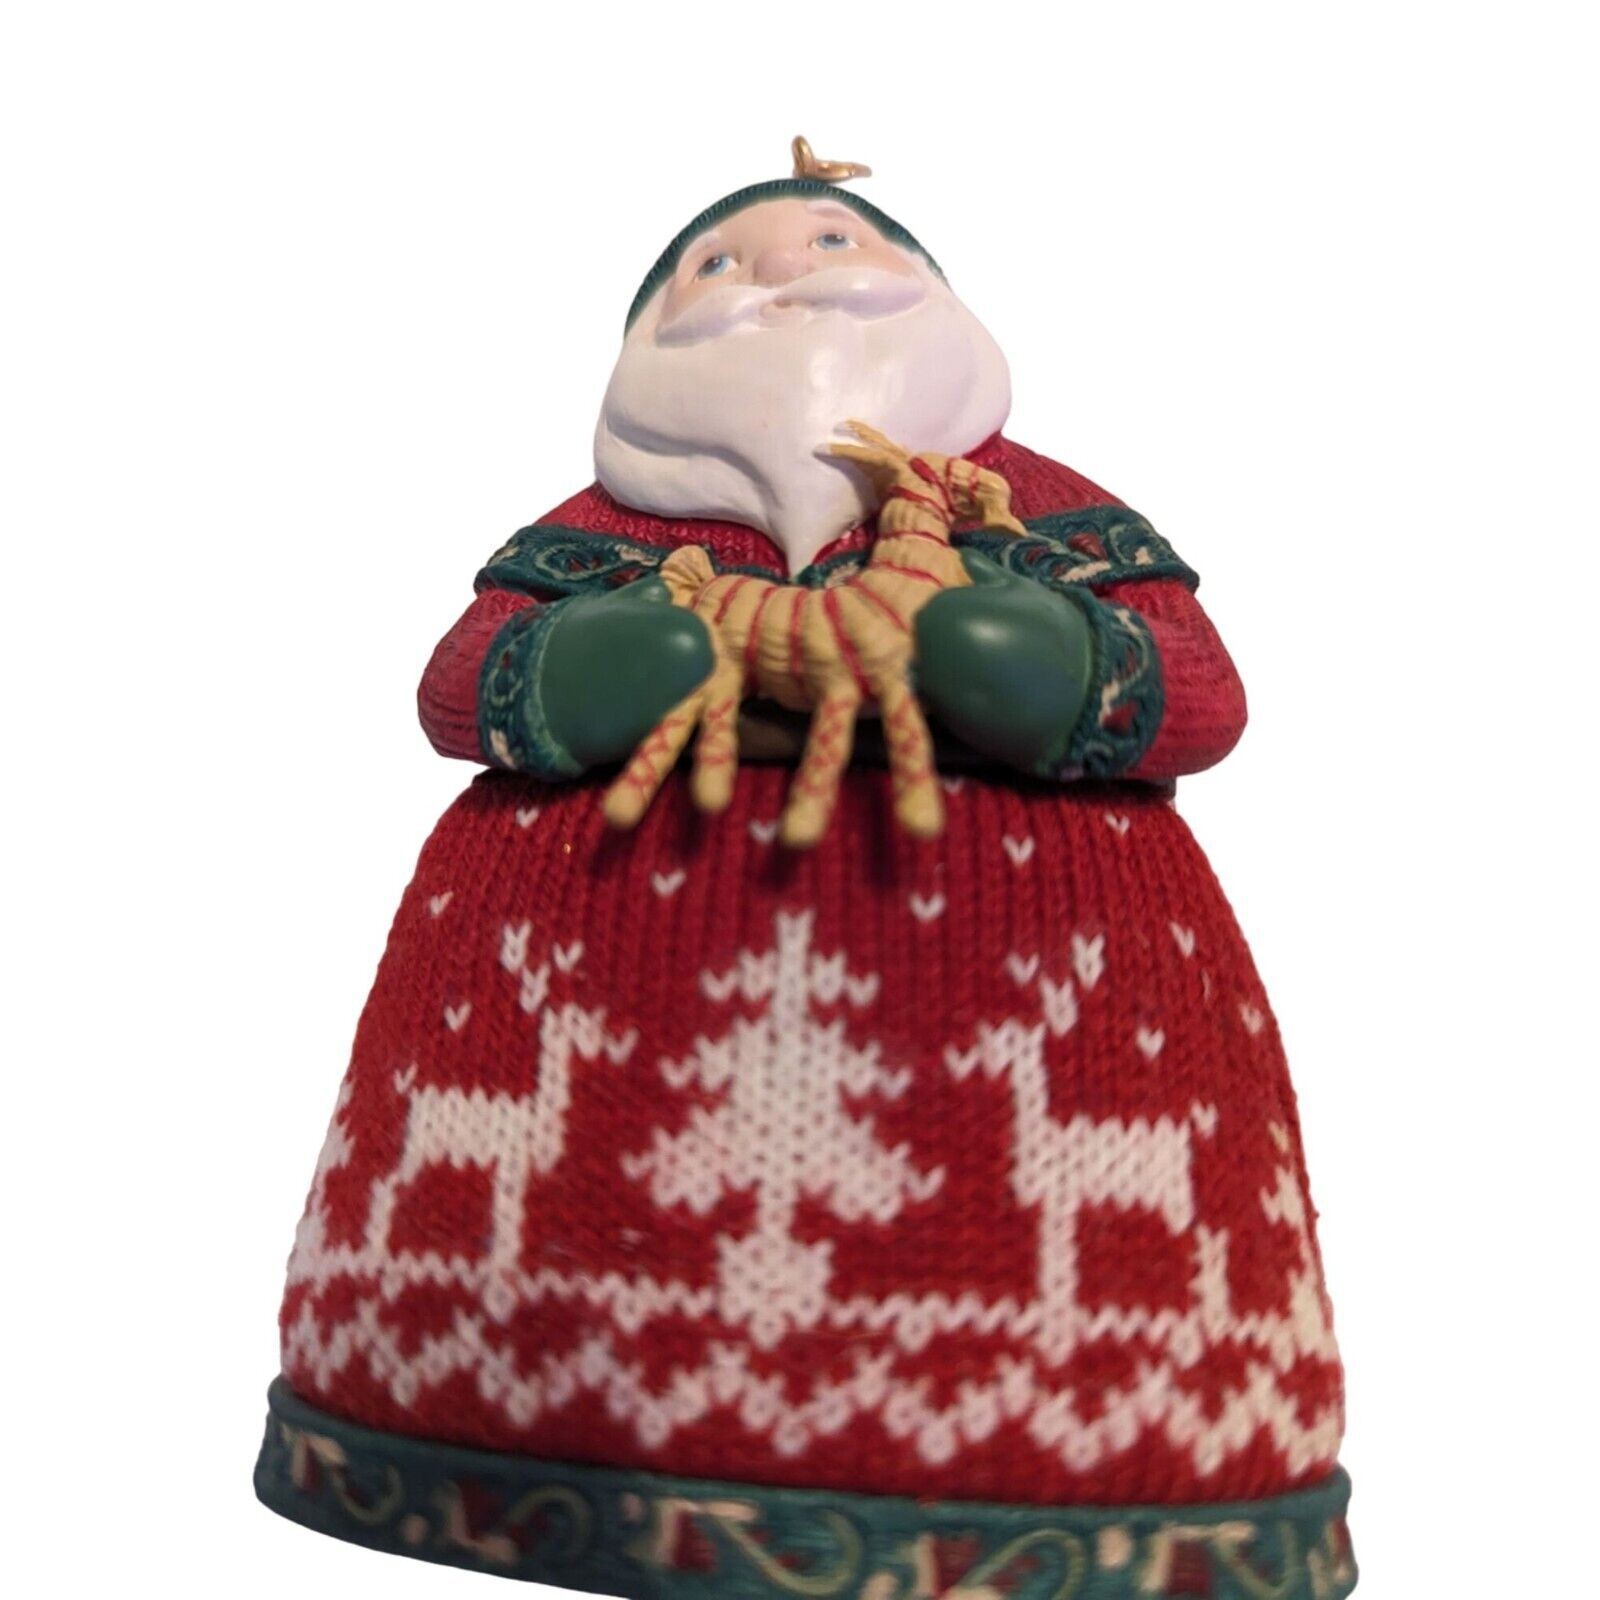 2004 Hallmark Santa's around the World Keepsake Ornament - Norway fabric resin